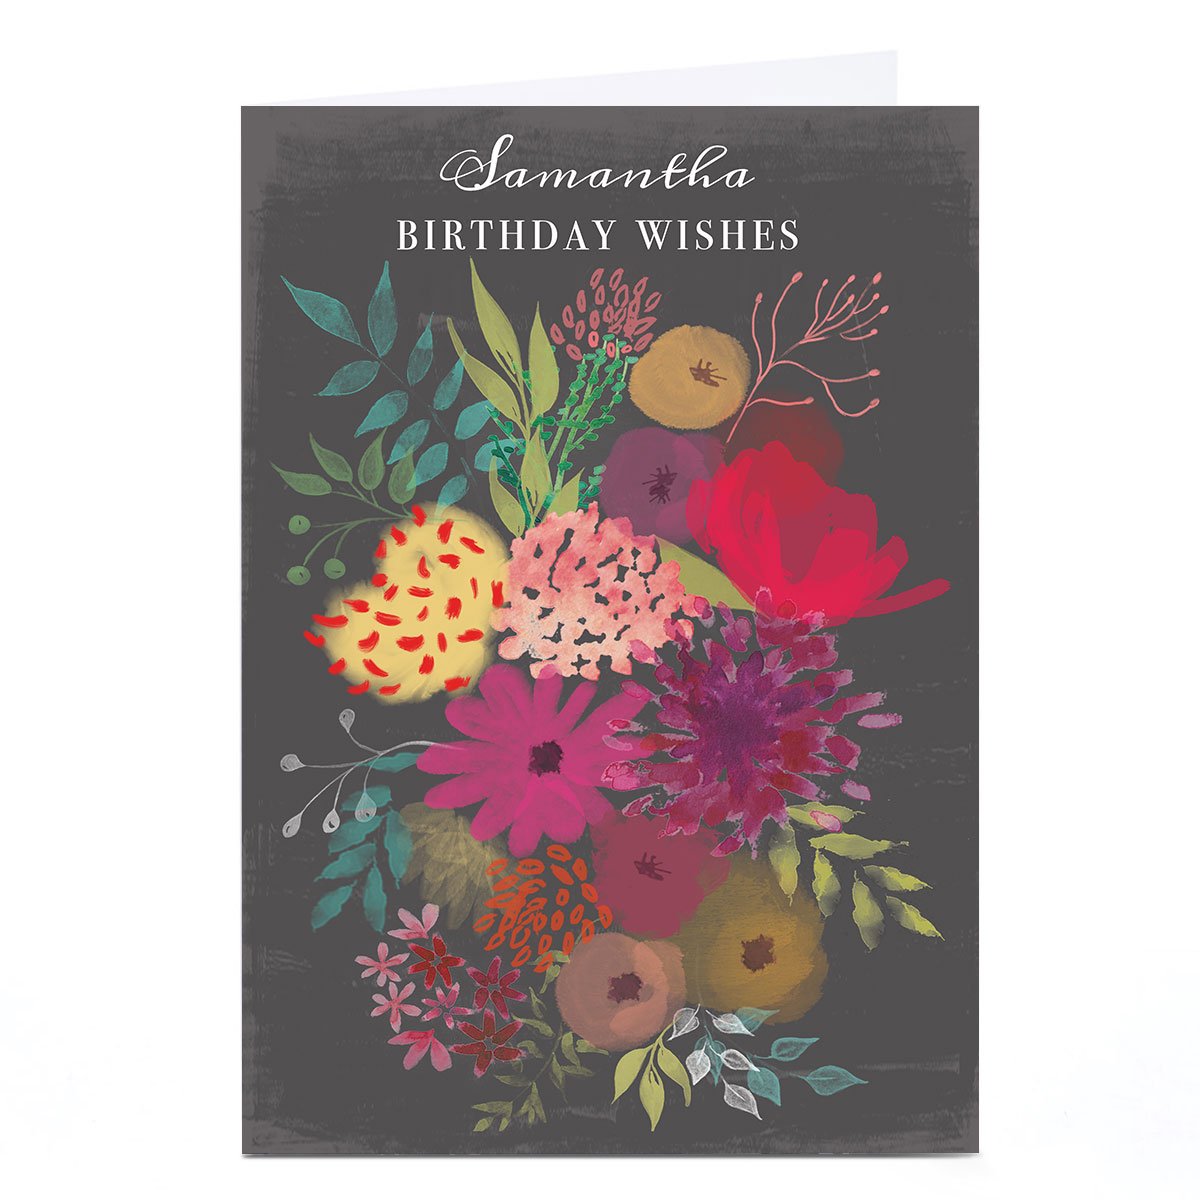 Personalised Emma Isaacs Birthday Card - Birthday Wishes 